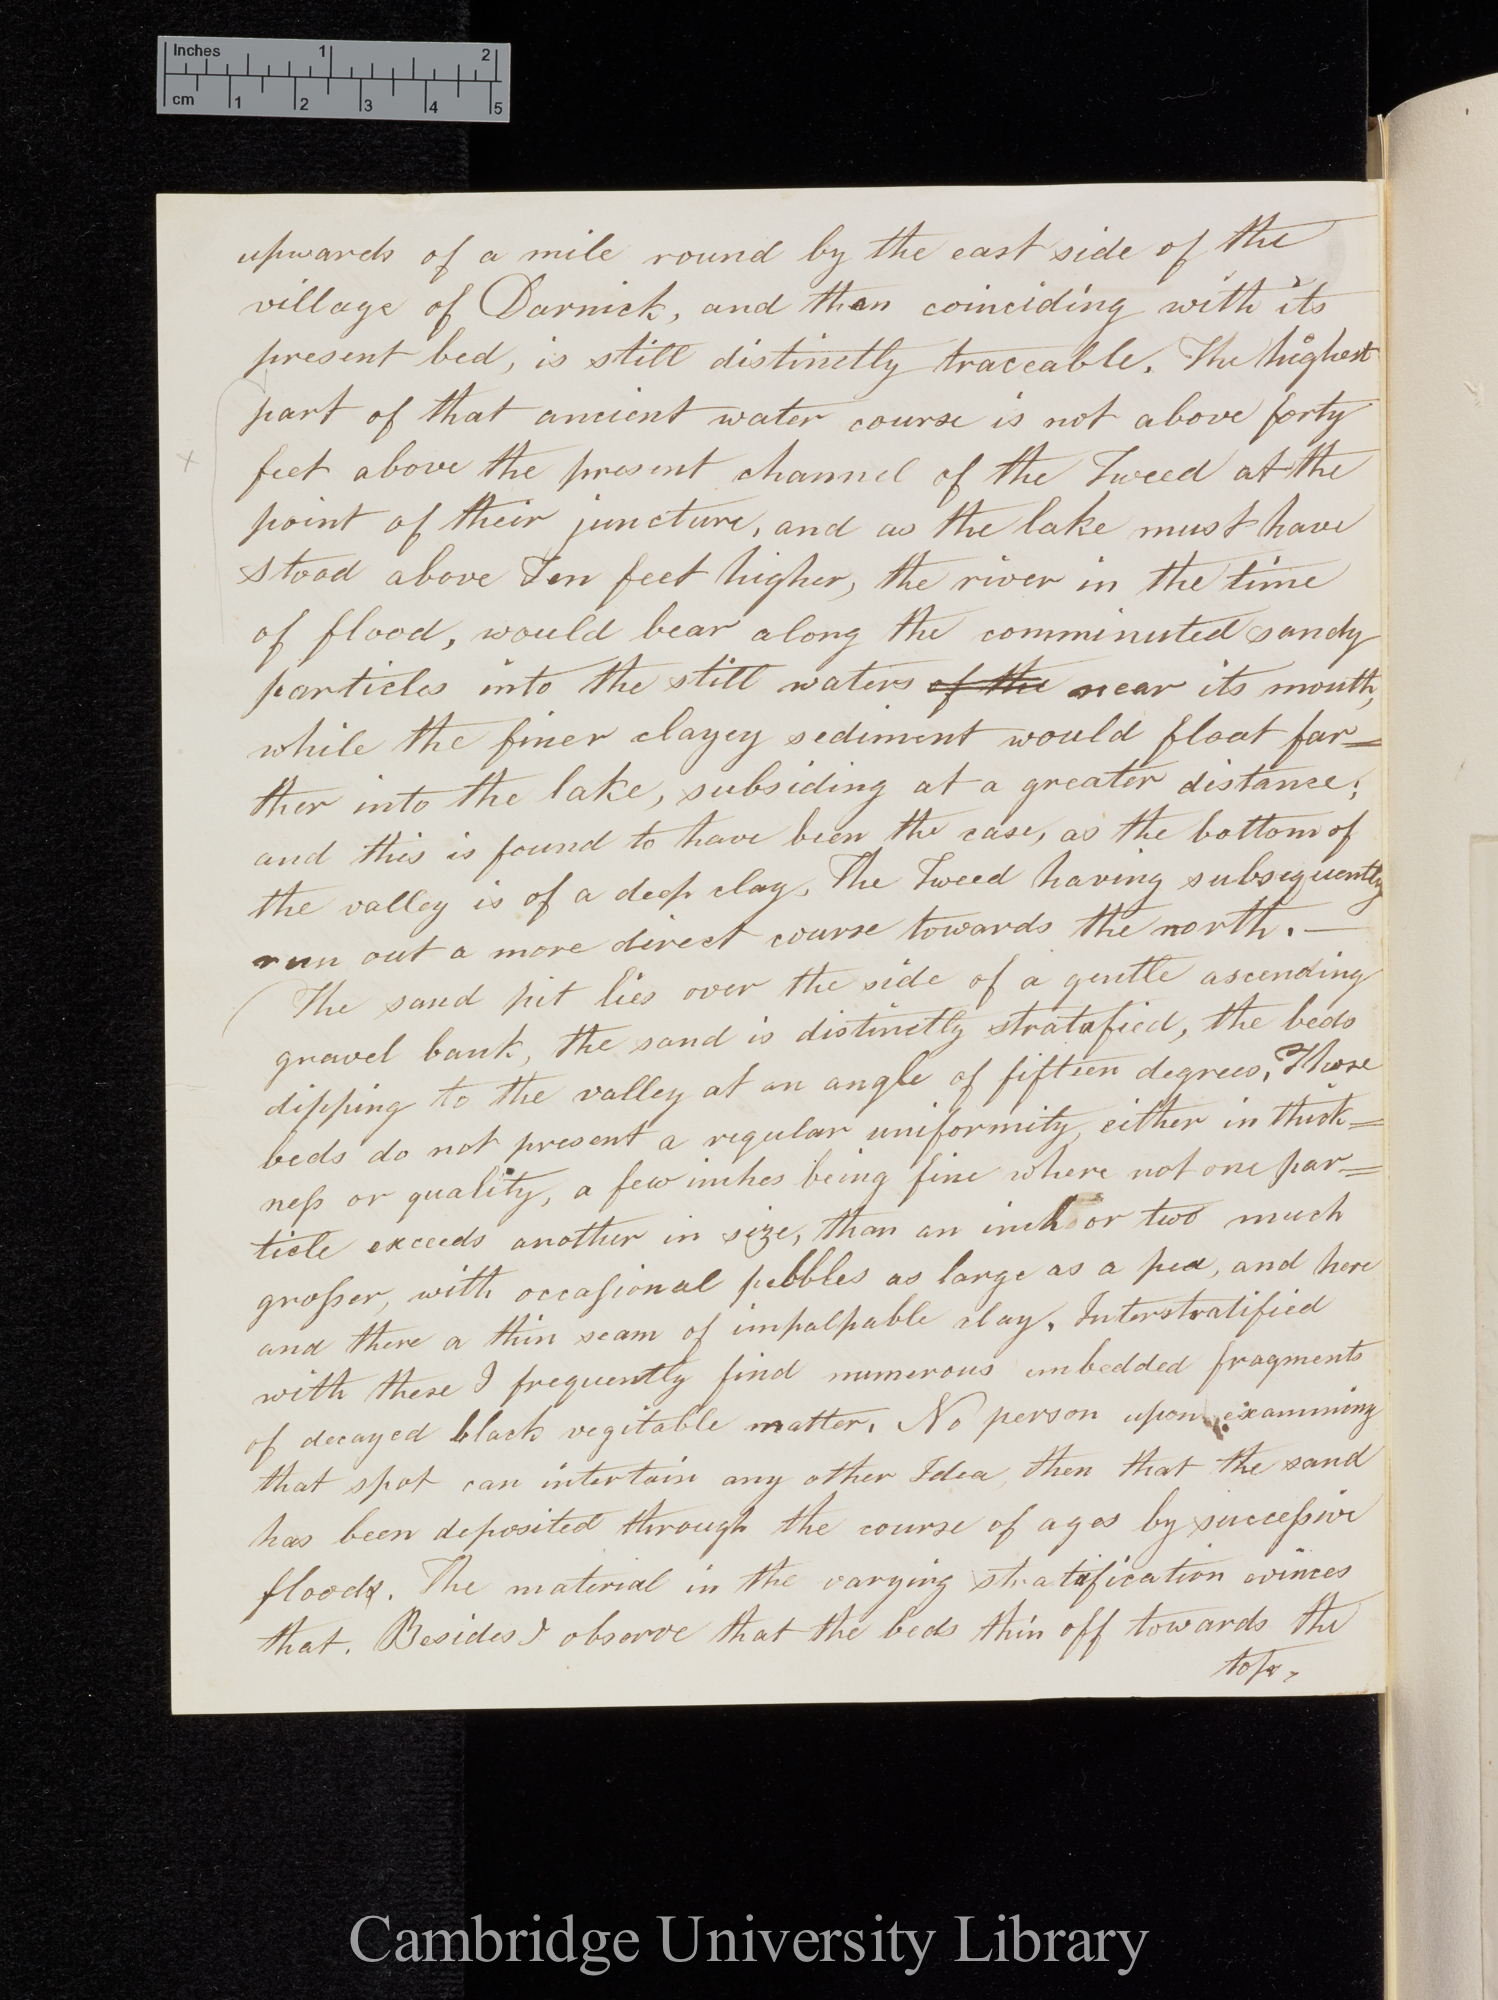 William Kemp to Charles Robert Darwin